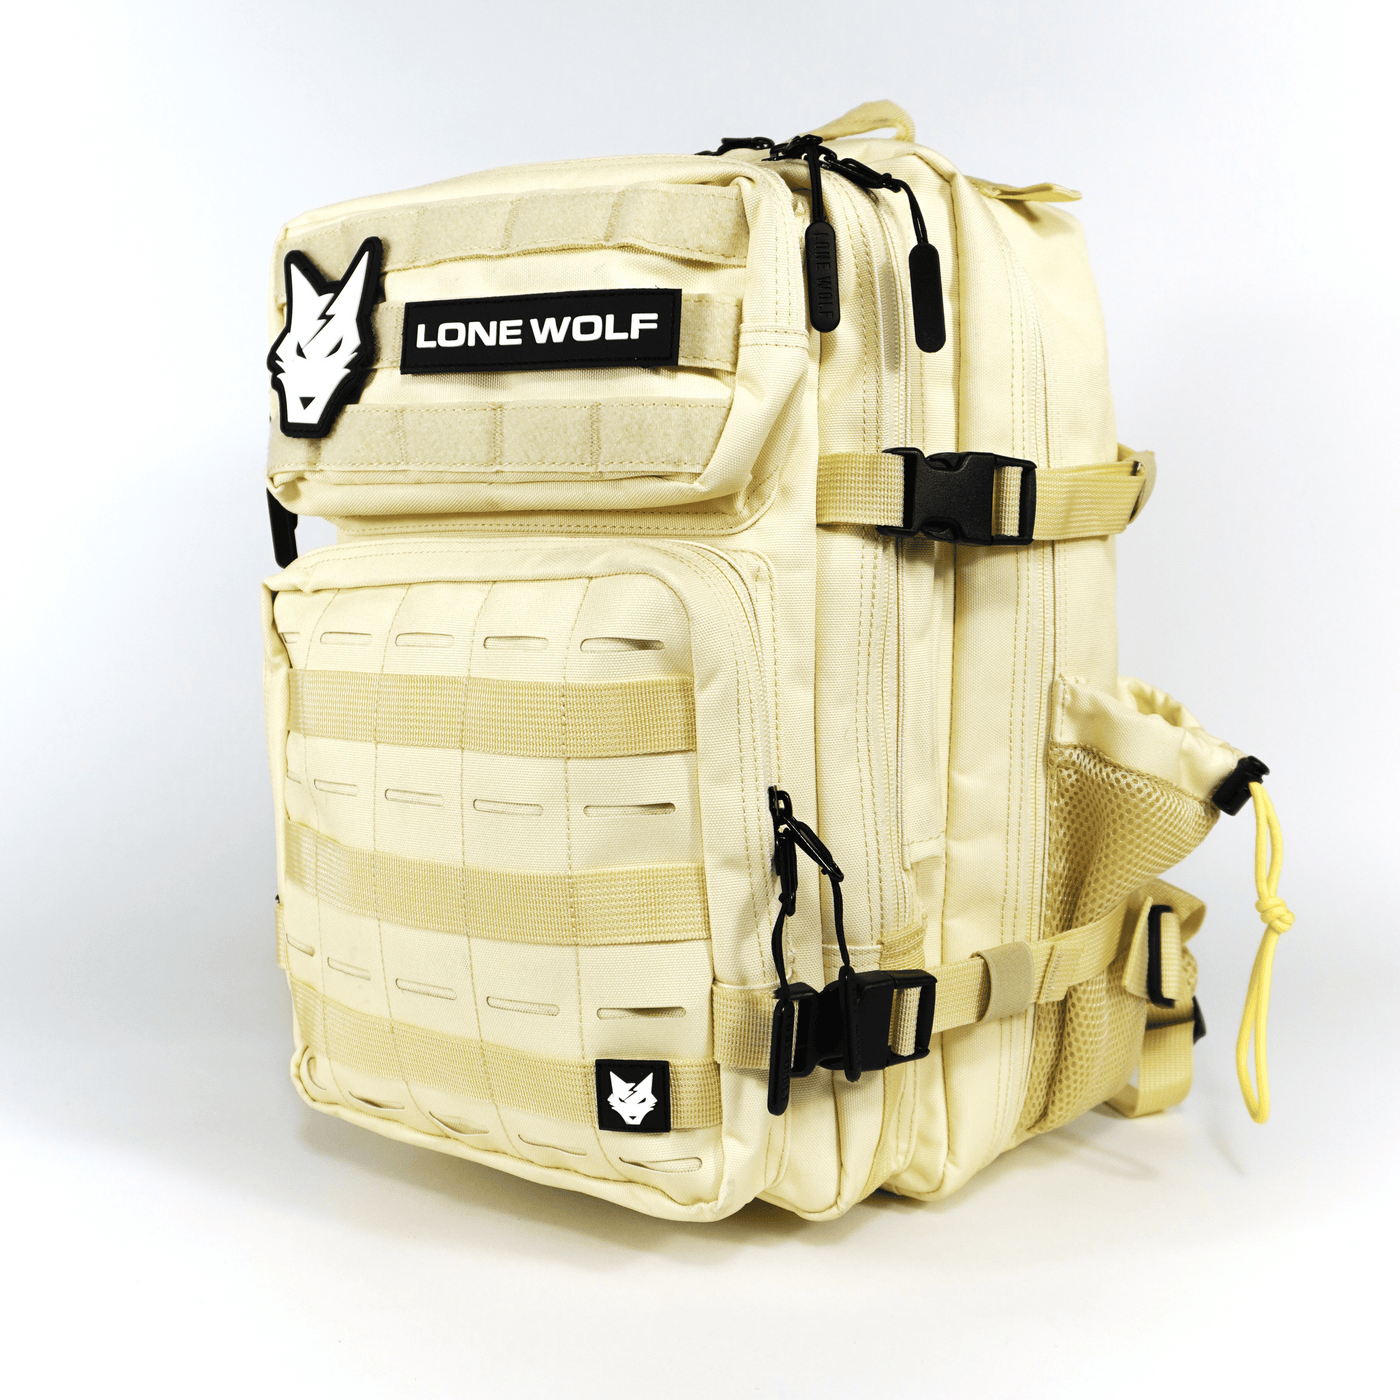 Gen 3 Lemonade 35L Backpack